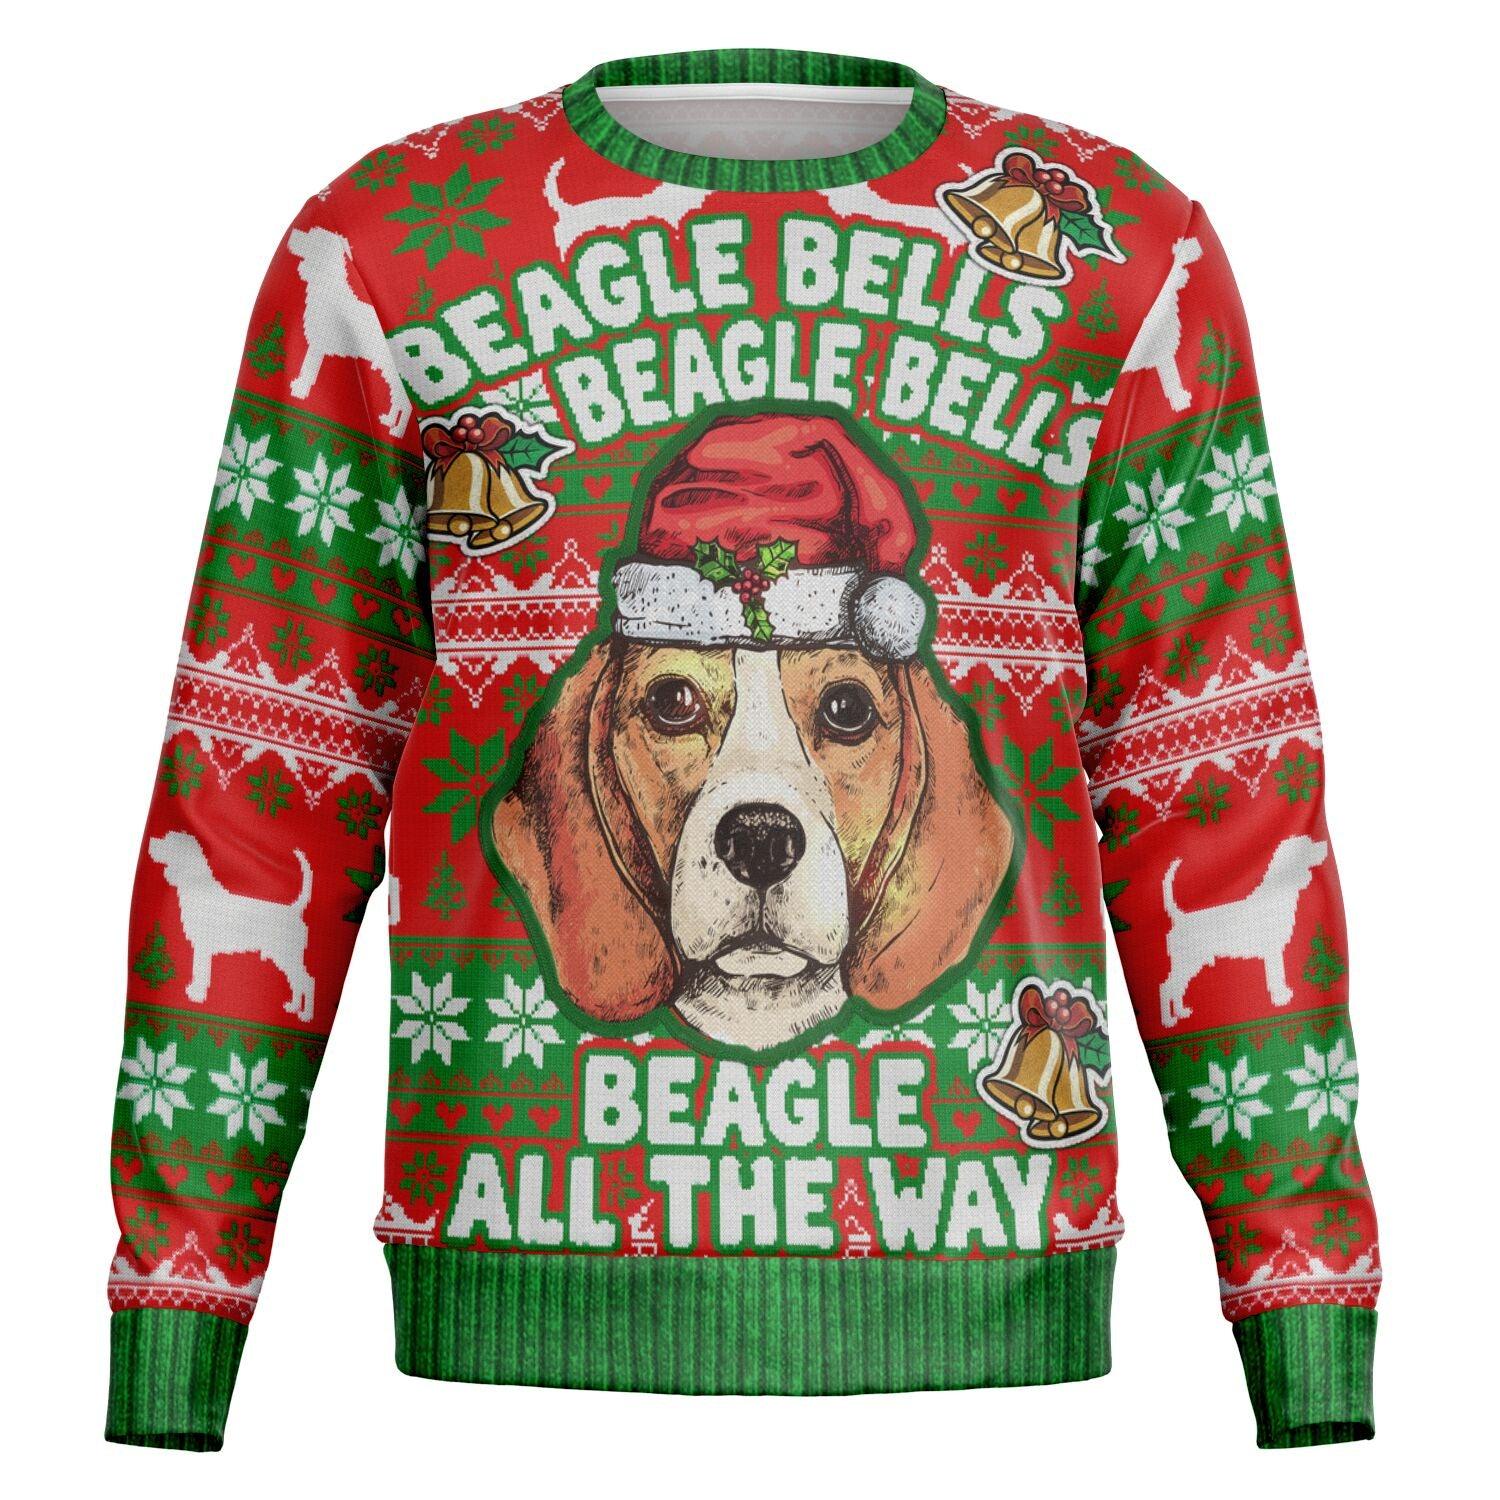 Beagle Bells Top Koala Crewneck Pullover Ugly Christmas Sweater - TopKoalaTee